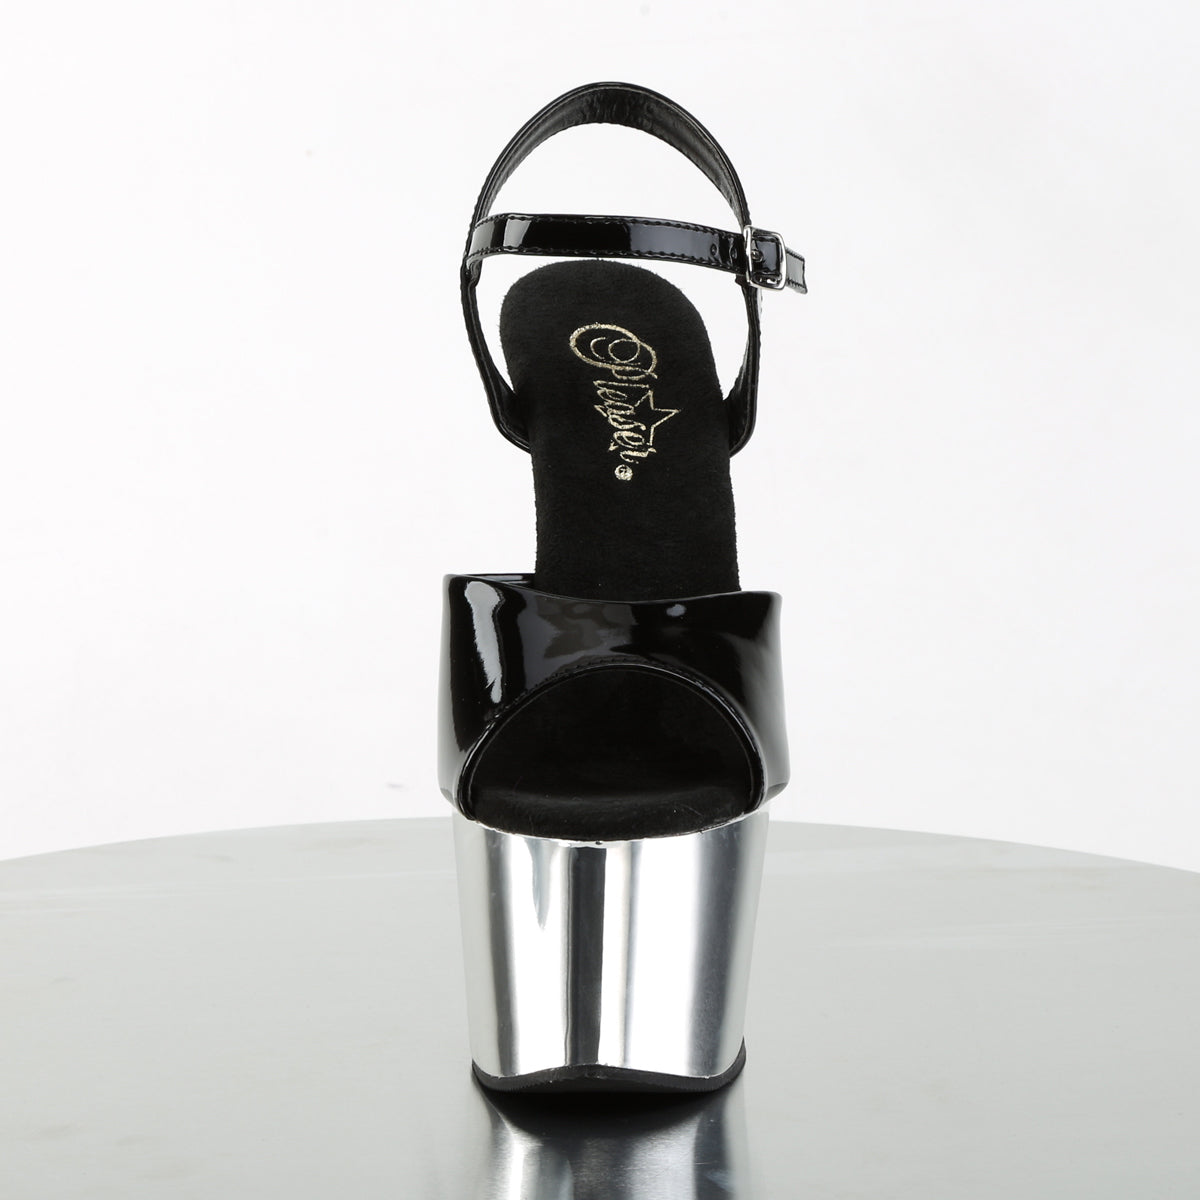 ADORE-709 Black Patent/Silver Chrome Platform Sandal Pleaser